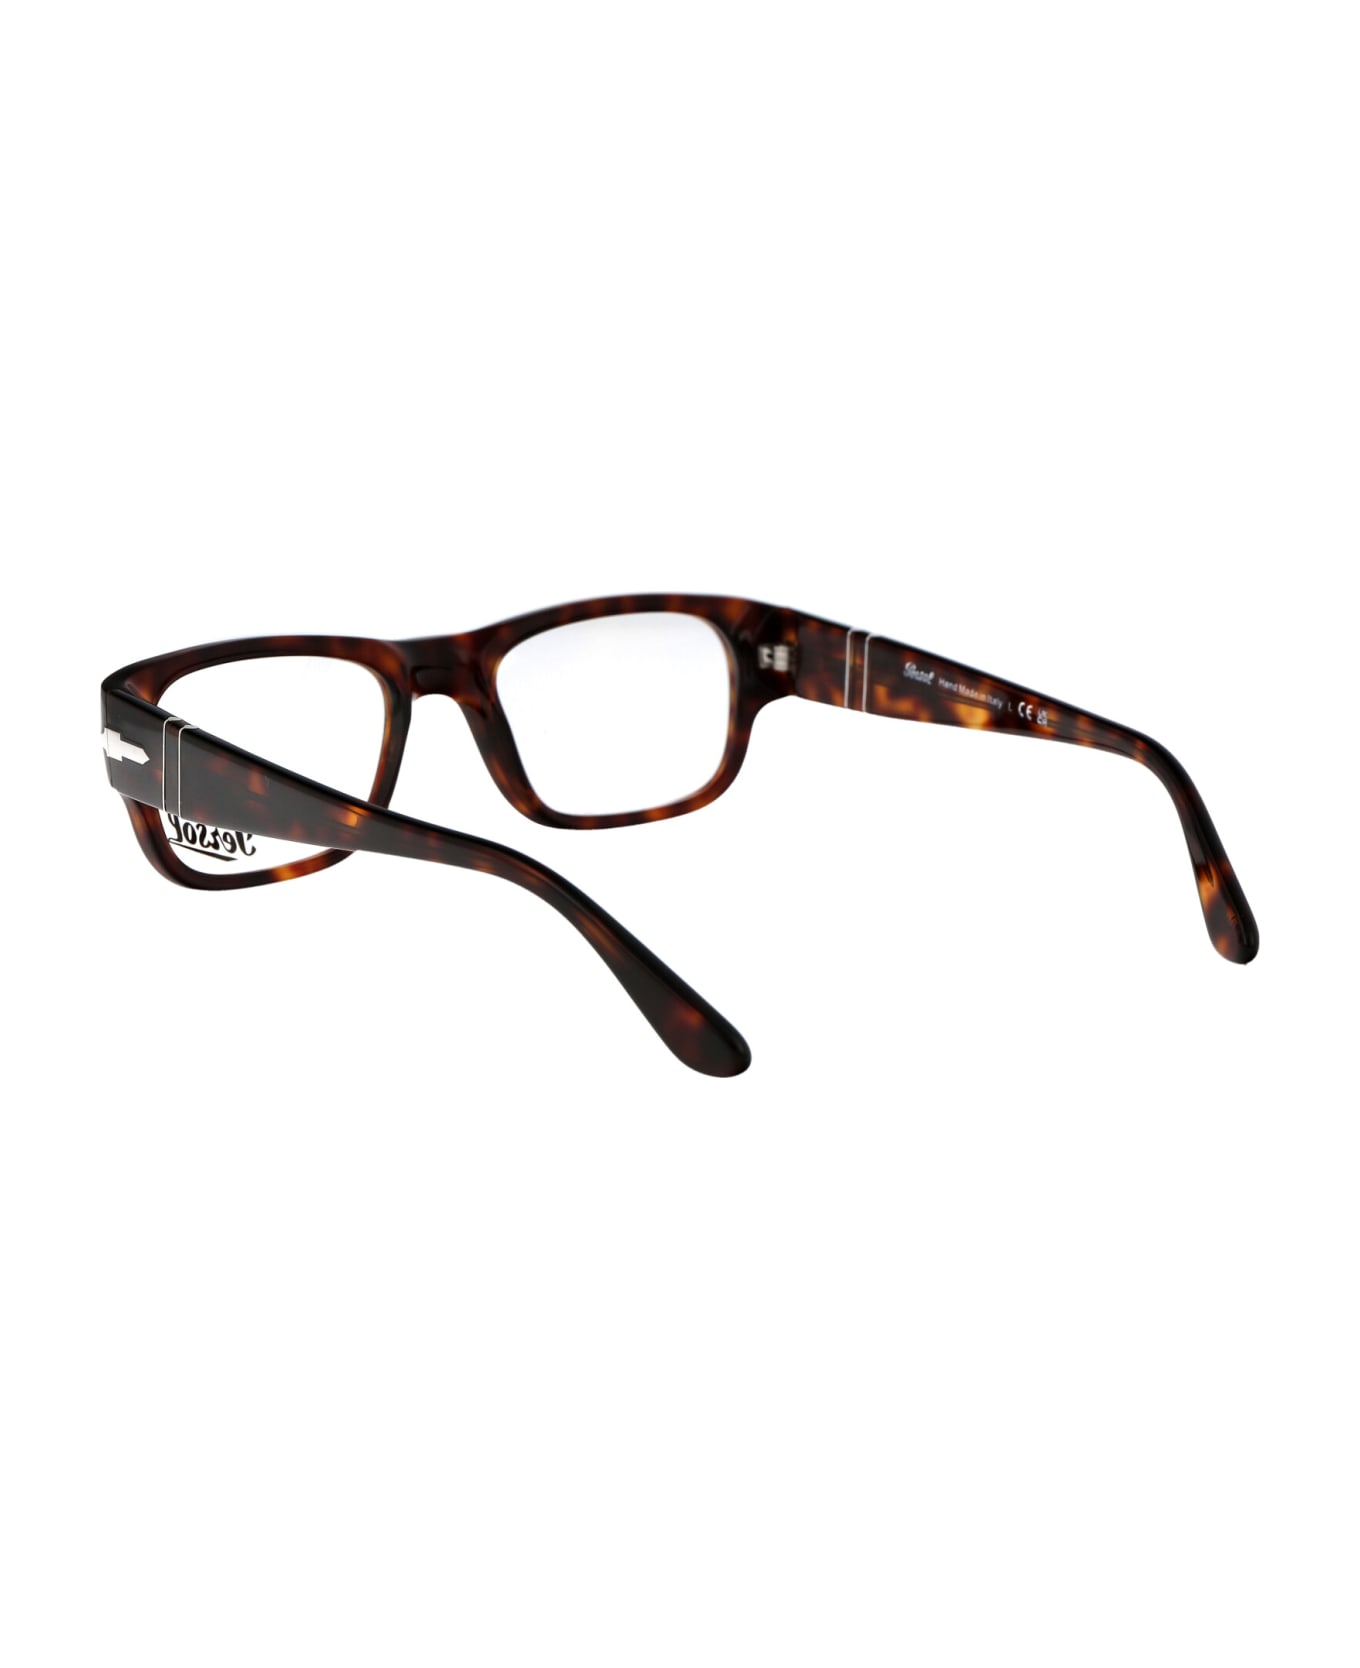 Persol 0po3324v Glasses - 24 HAVANA アイウェア